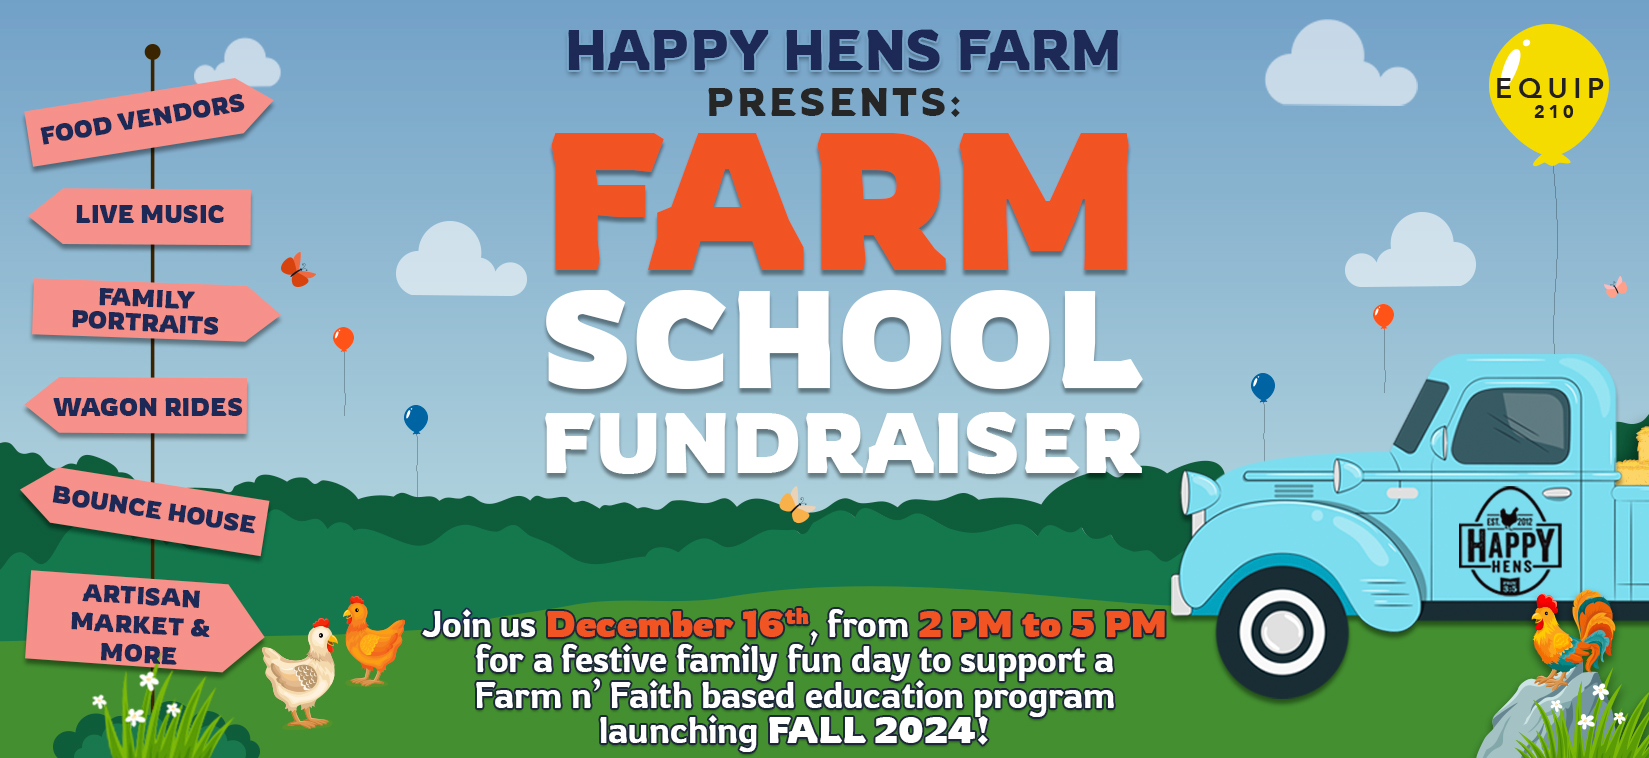 Banner for Farm School Fundraiser presented by Happy Hens Farm